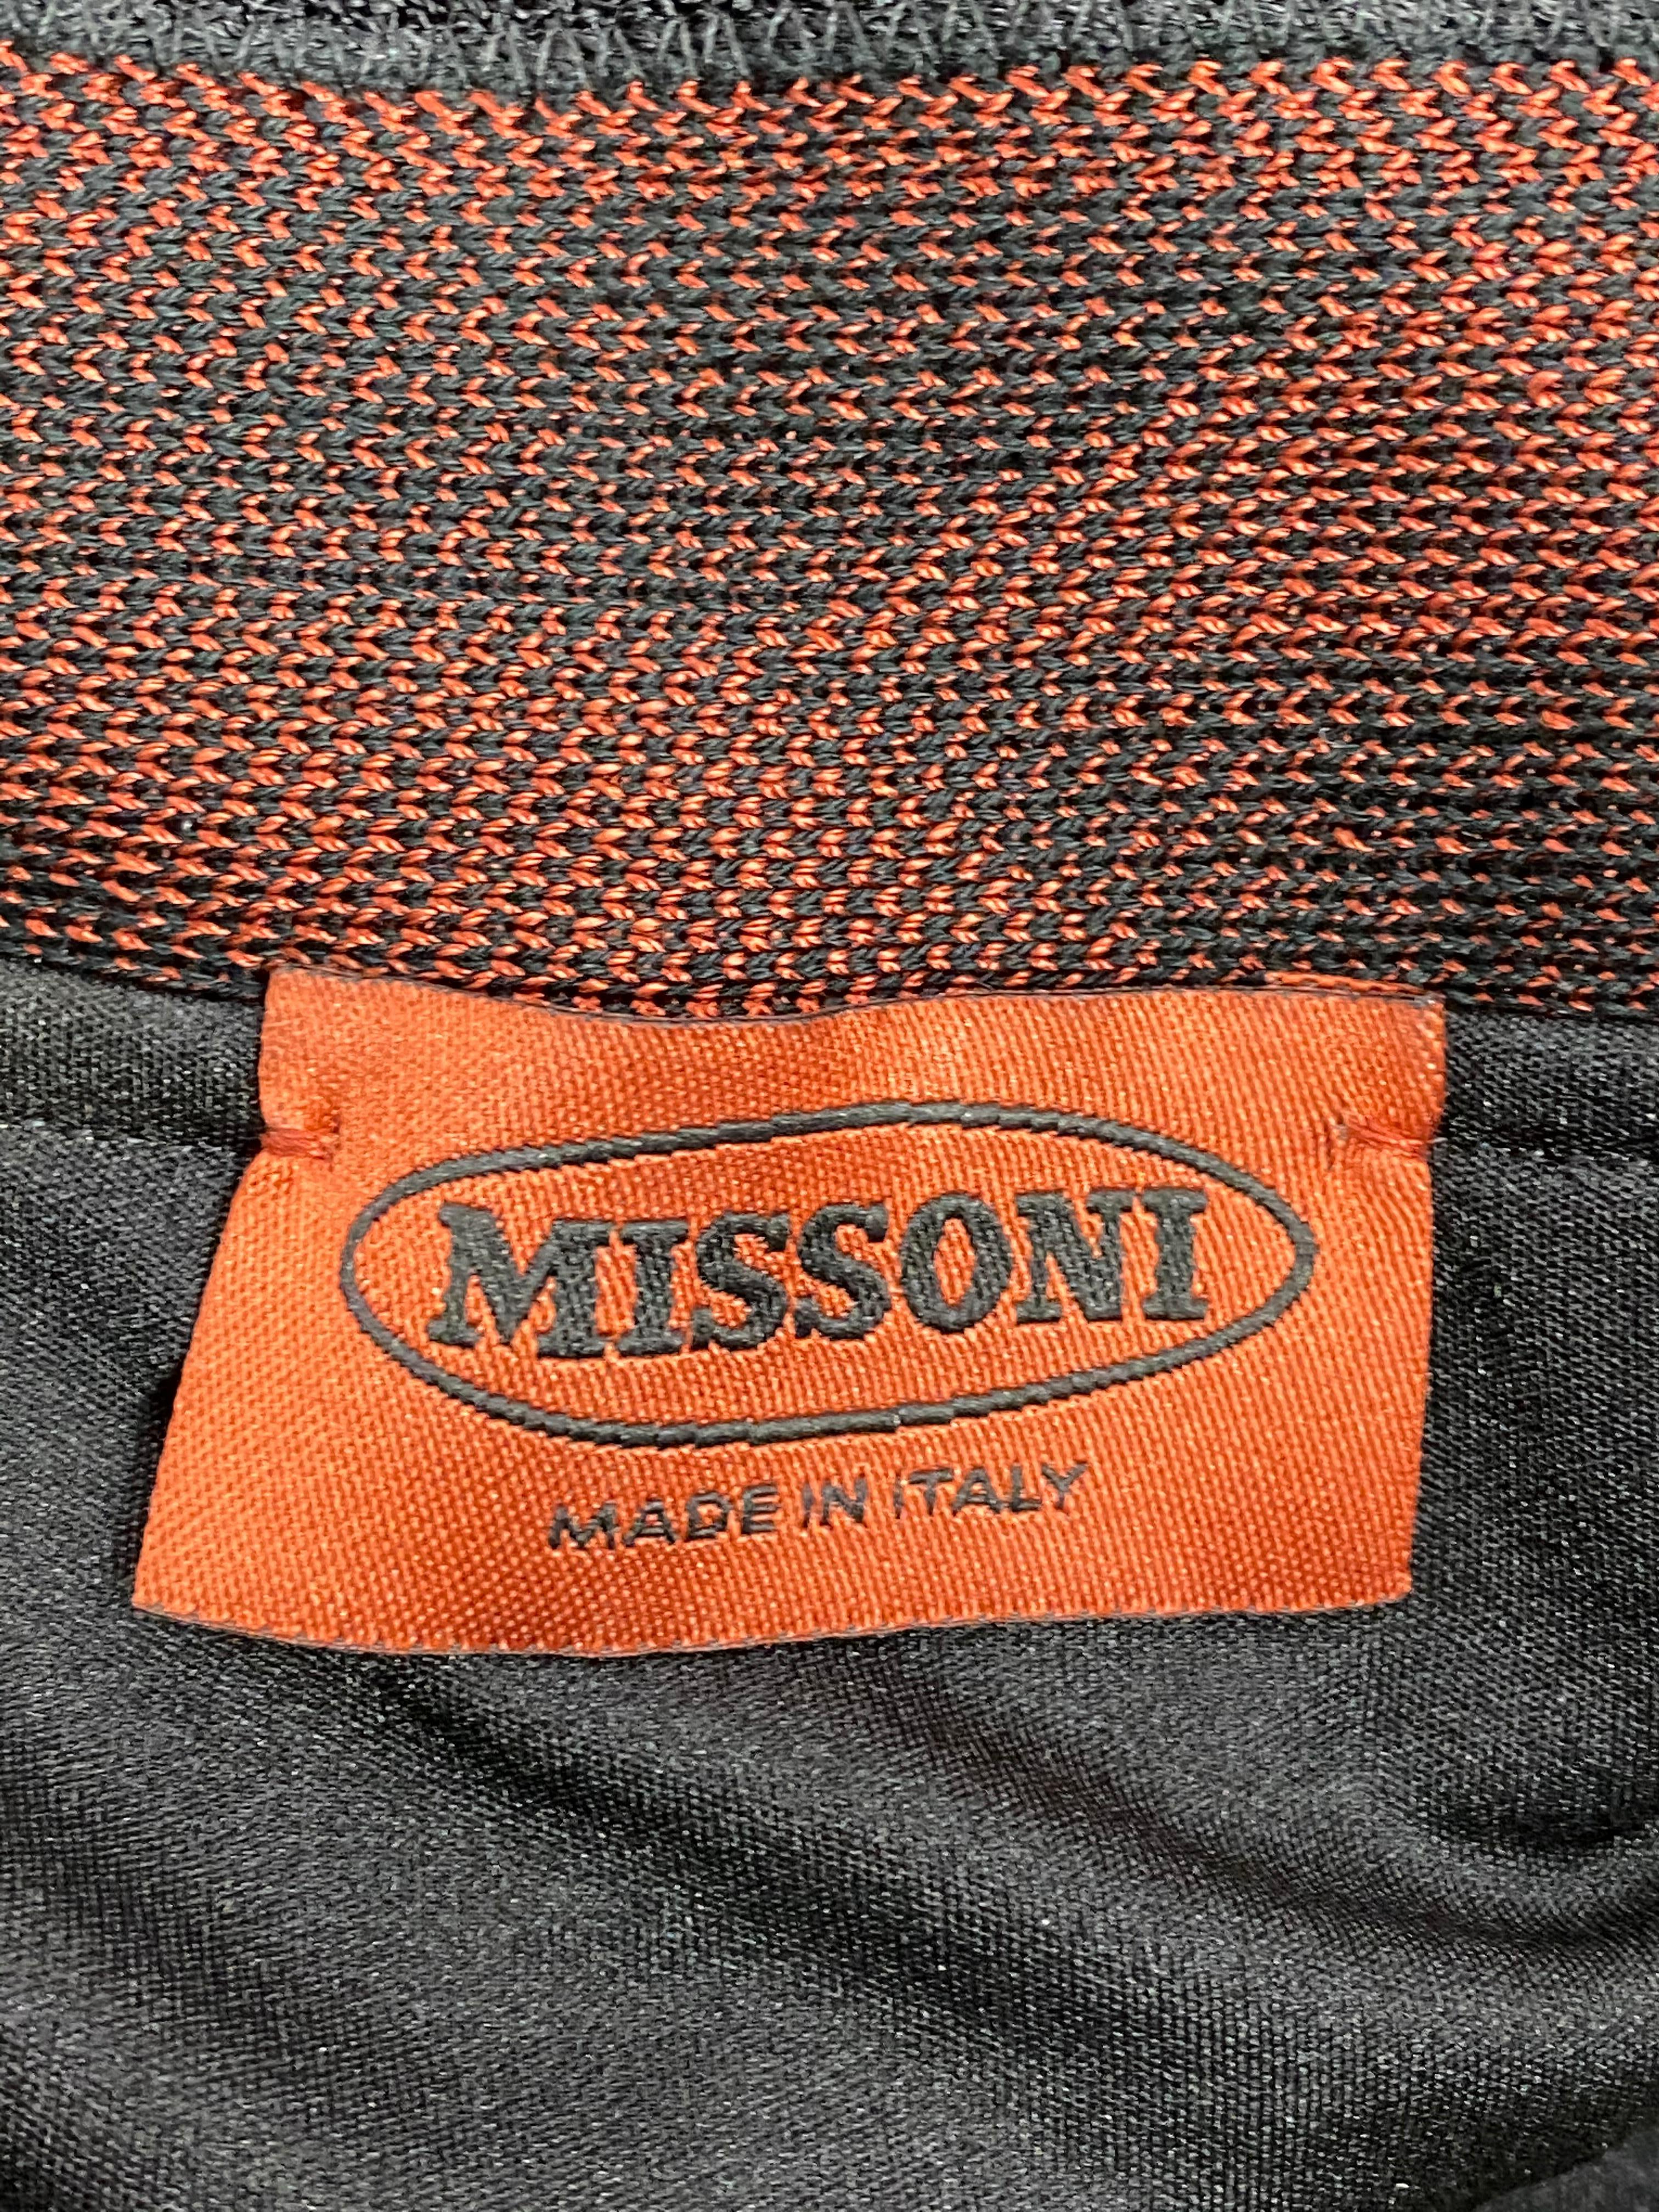 MISSONI Black and Multi Color Sleeveless Spaghetti Strap Maxi Dress 3